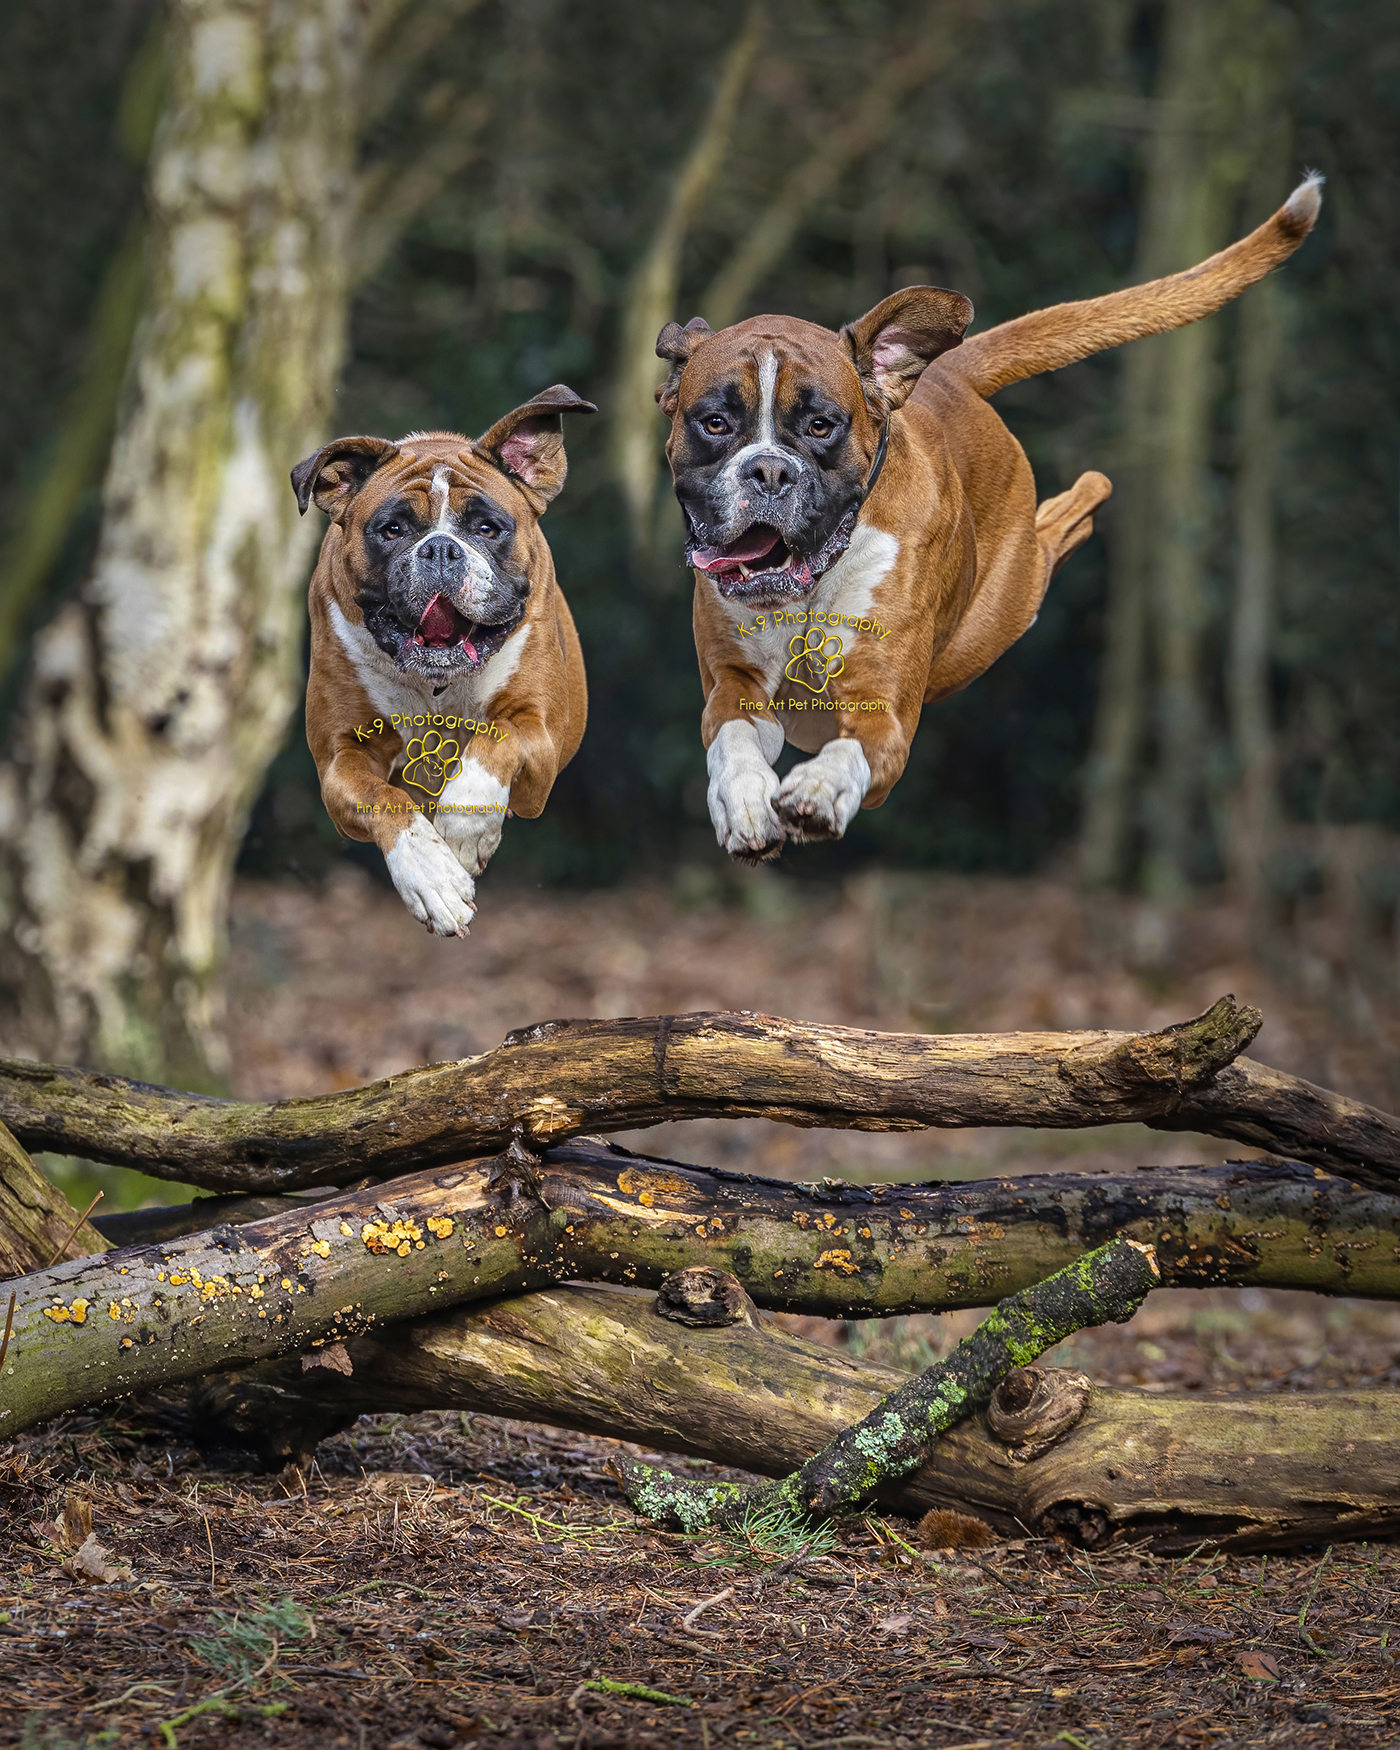 Award winning location Dog Photography from UK Pet photographer Adrian Bullers